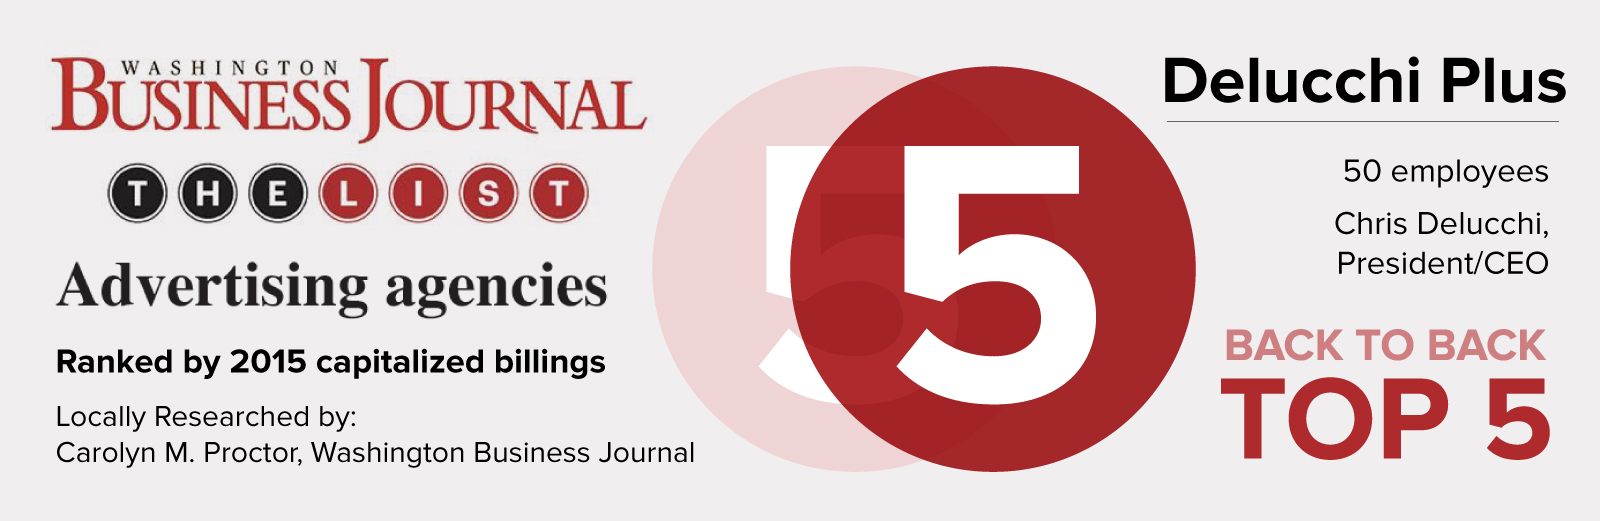 washington-business-journal-2015-top-5-banner